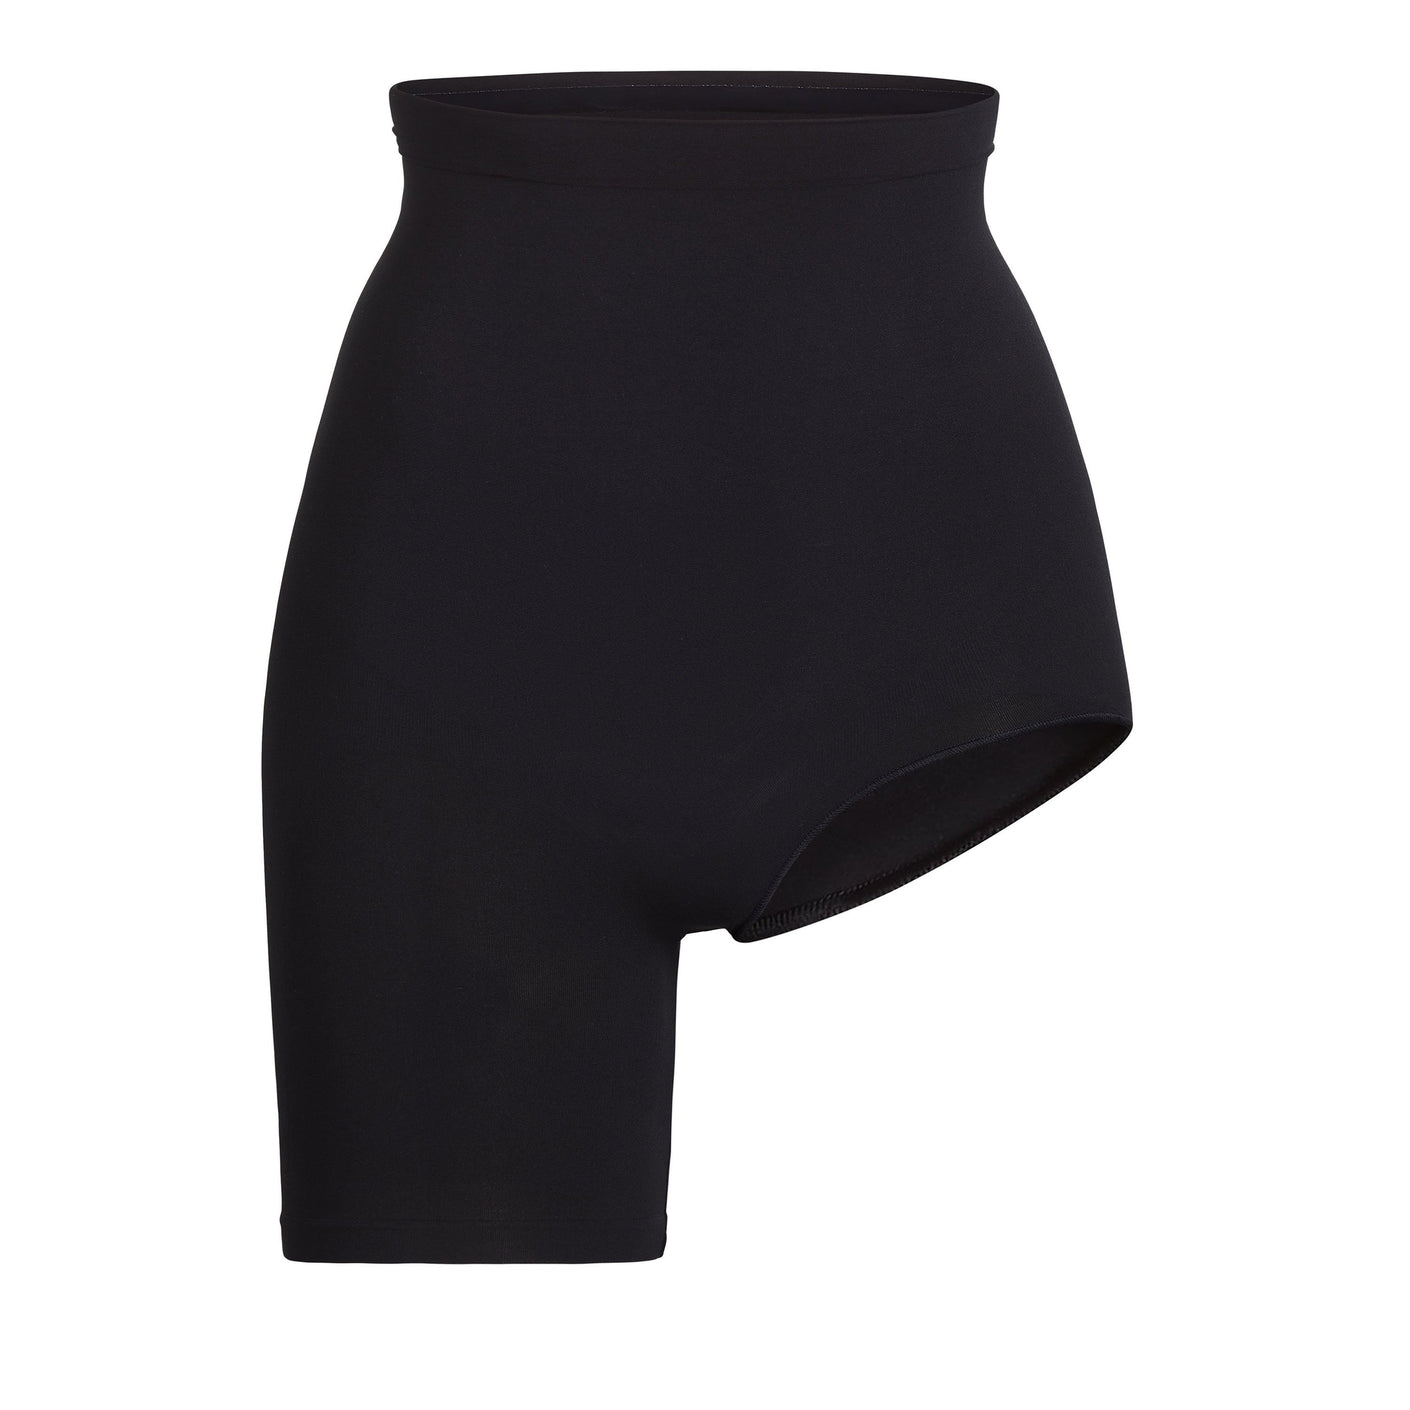 SKIMS Soft Smoothing Short “Onyx” (Black) plus Size 2X New Biker Shorts